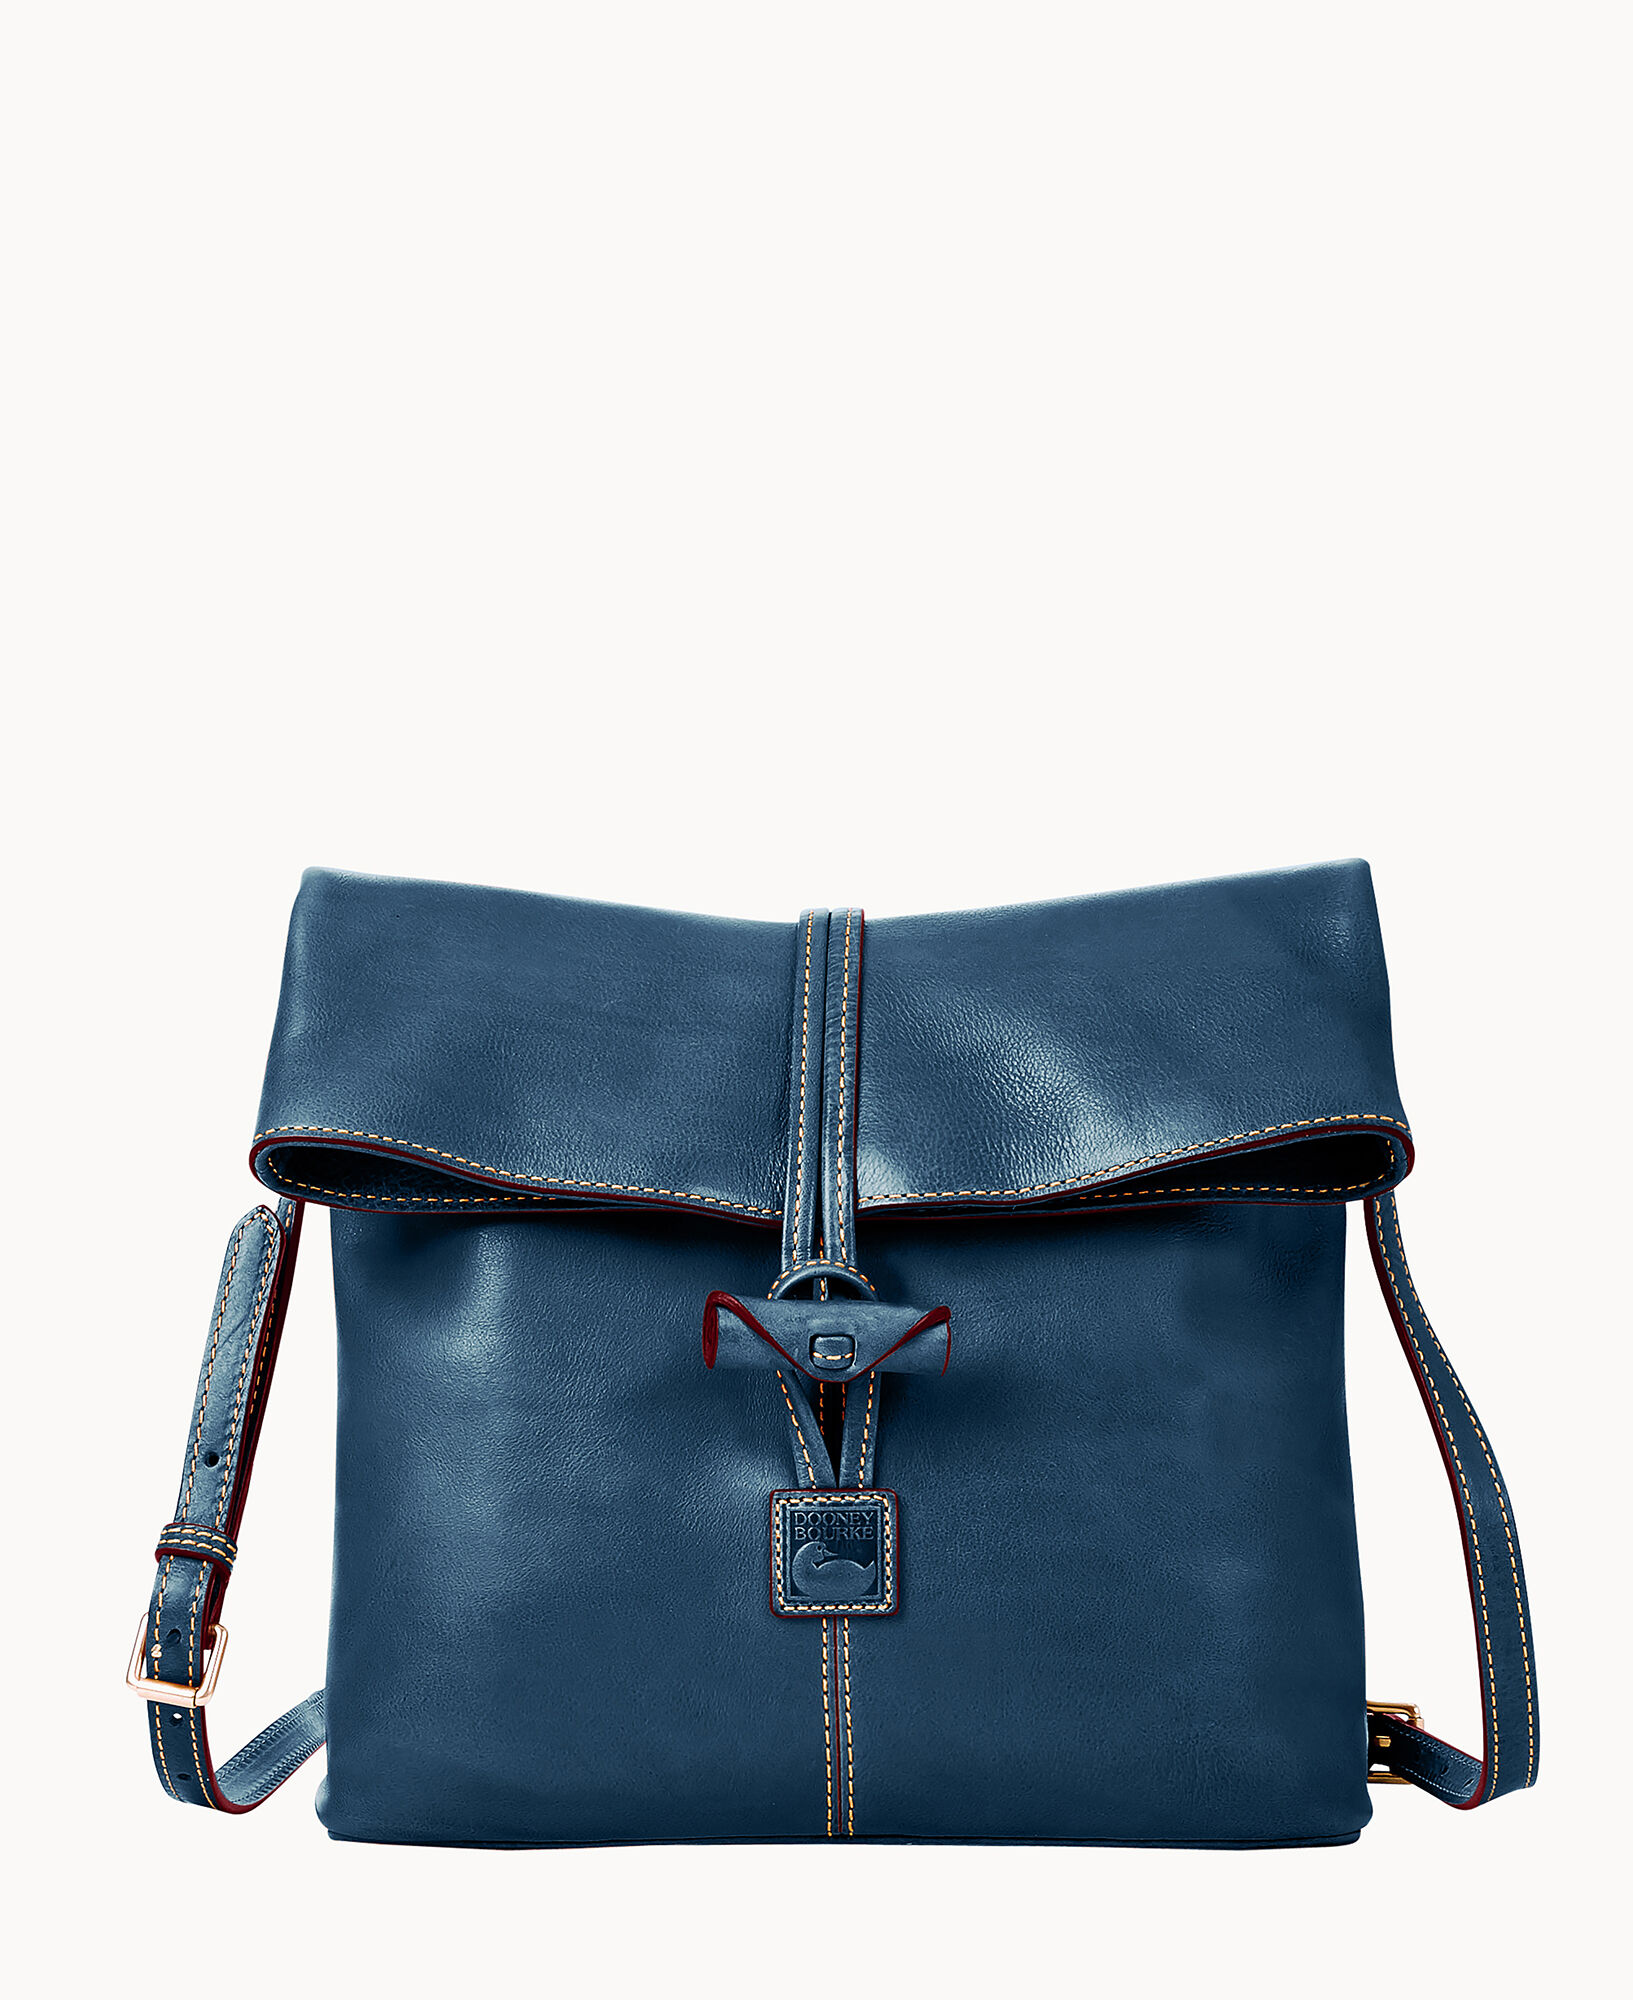 Dooney & Bourke Pebble Leather Fold Over Crossbody bag in slate blue leather